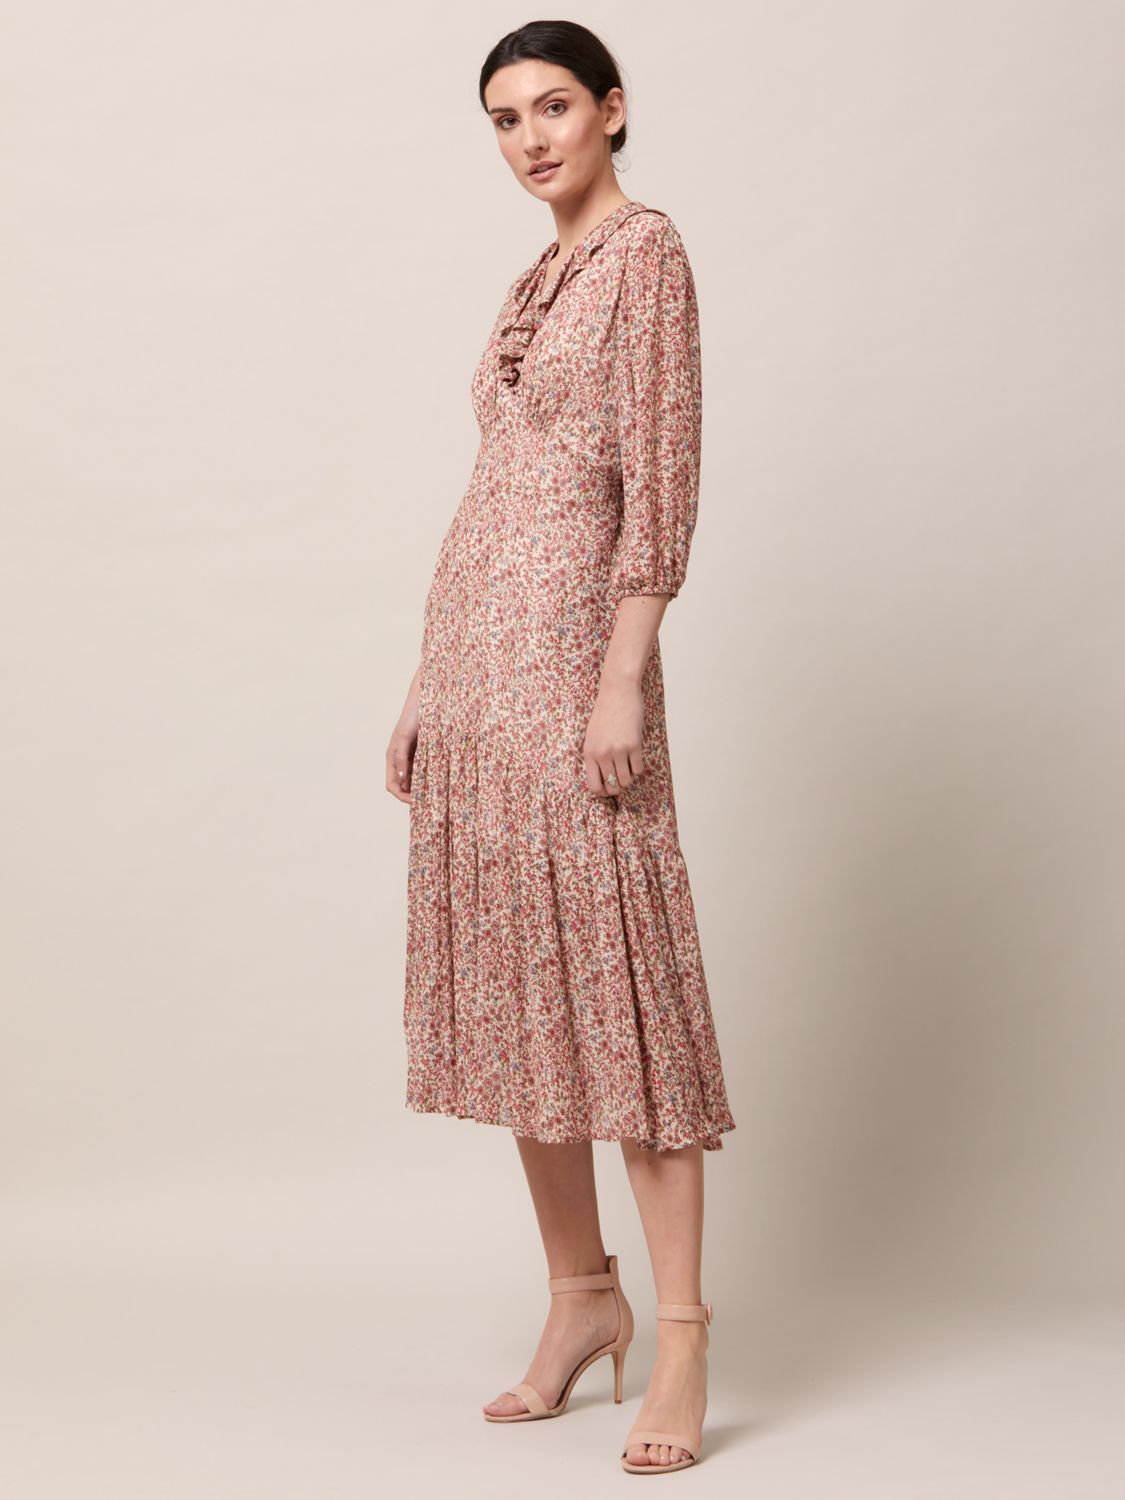 Helen McAlinden Maredith Vintage Floral Print Midi Dress, Multi, 18